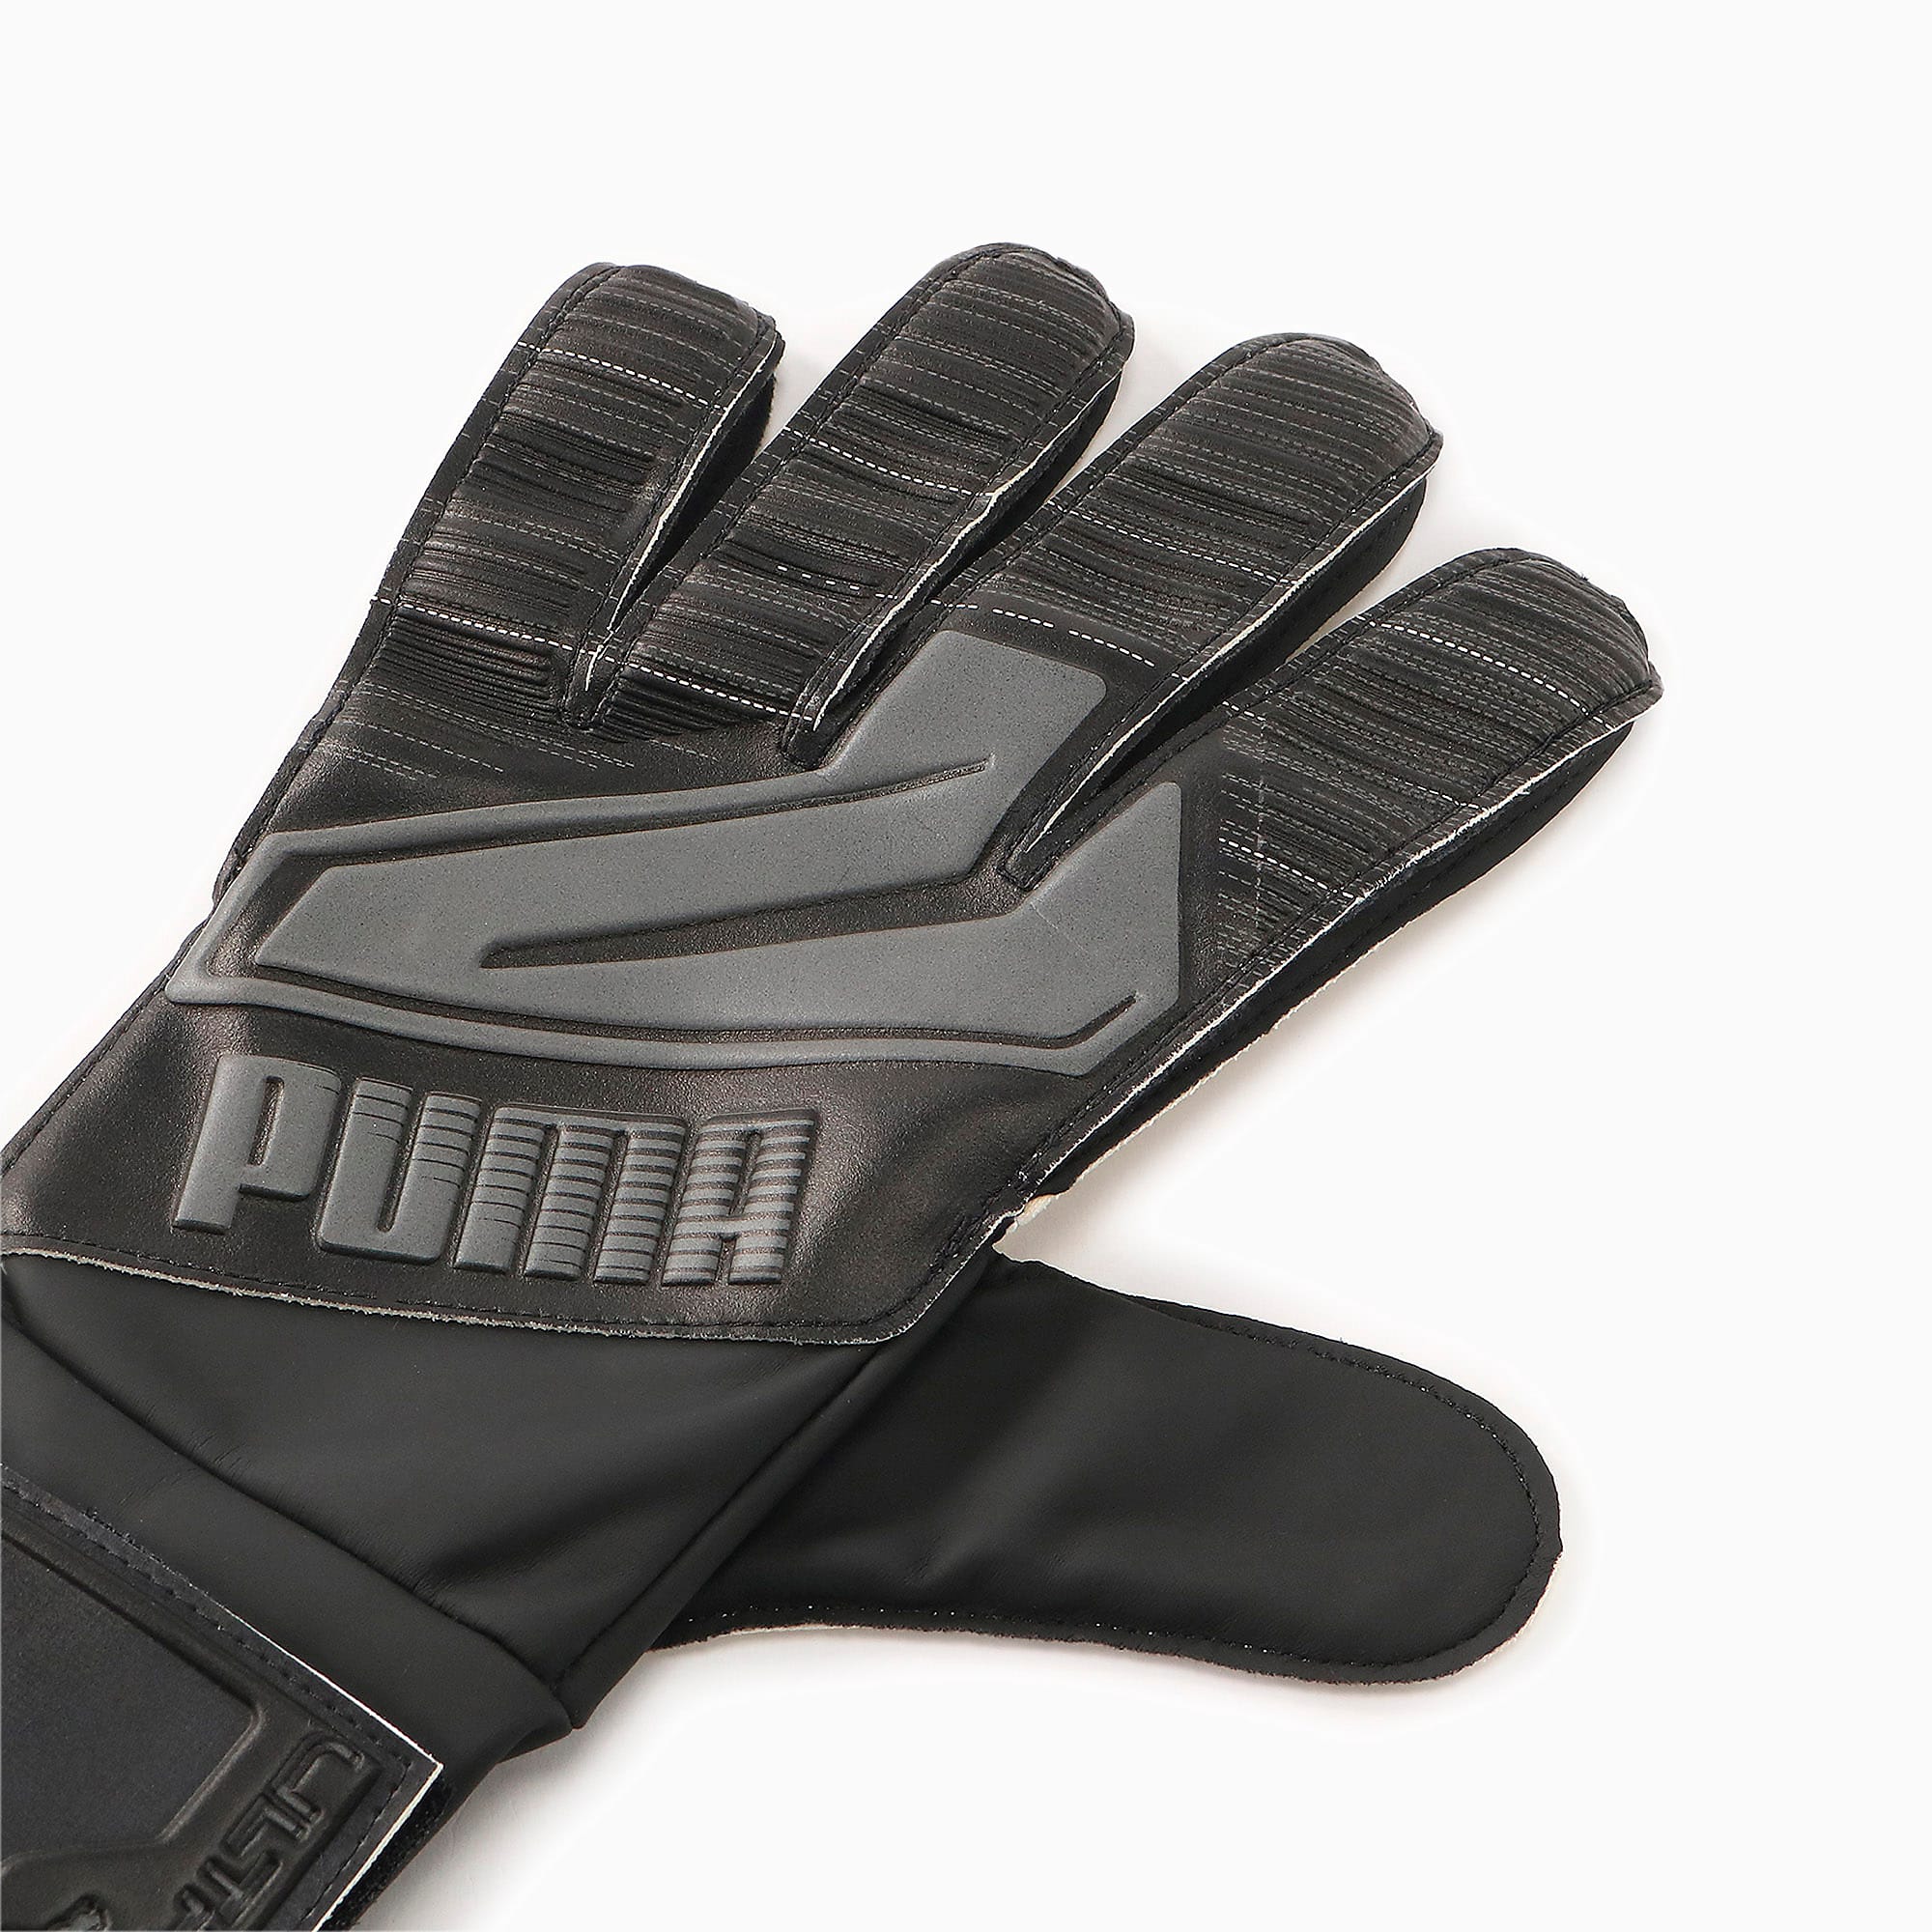 Puma公式 ウルトラ グリップ 4 Rc サッカー ゴールキーパー グローブ メンズ Puma Black Asphalt プーマ サッカー プーマ